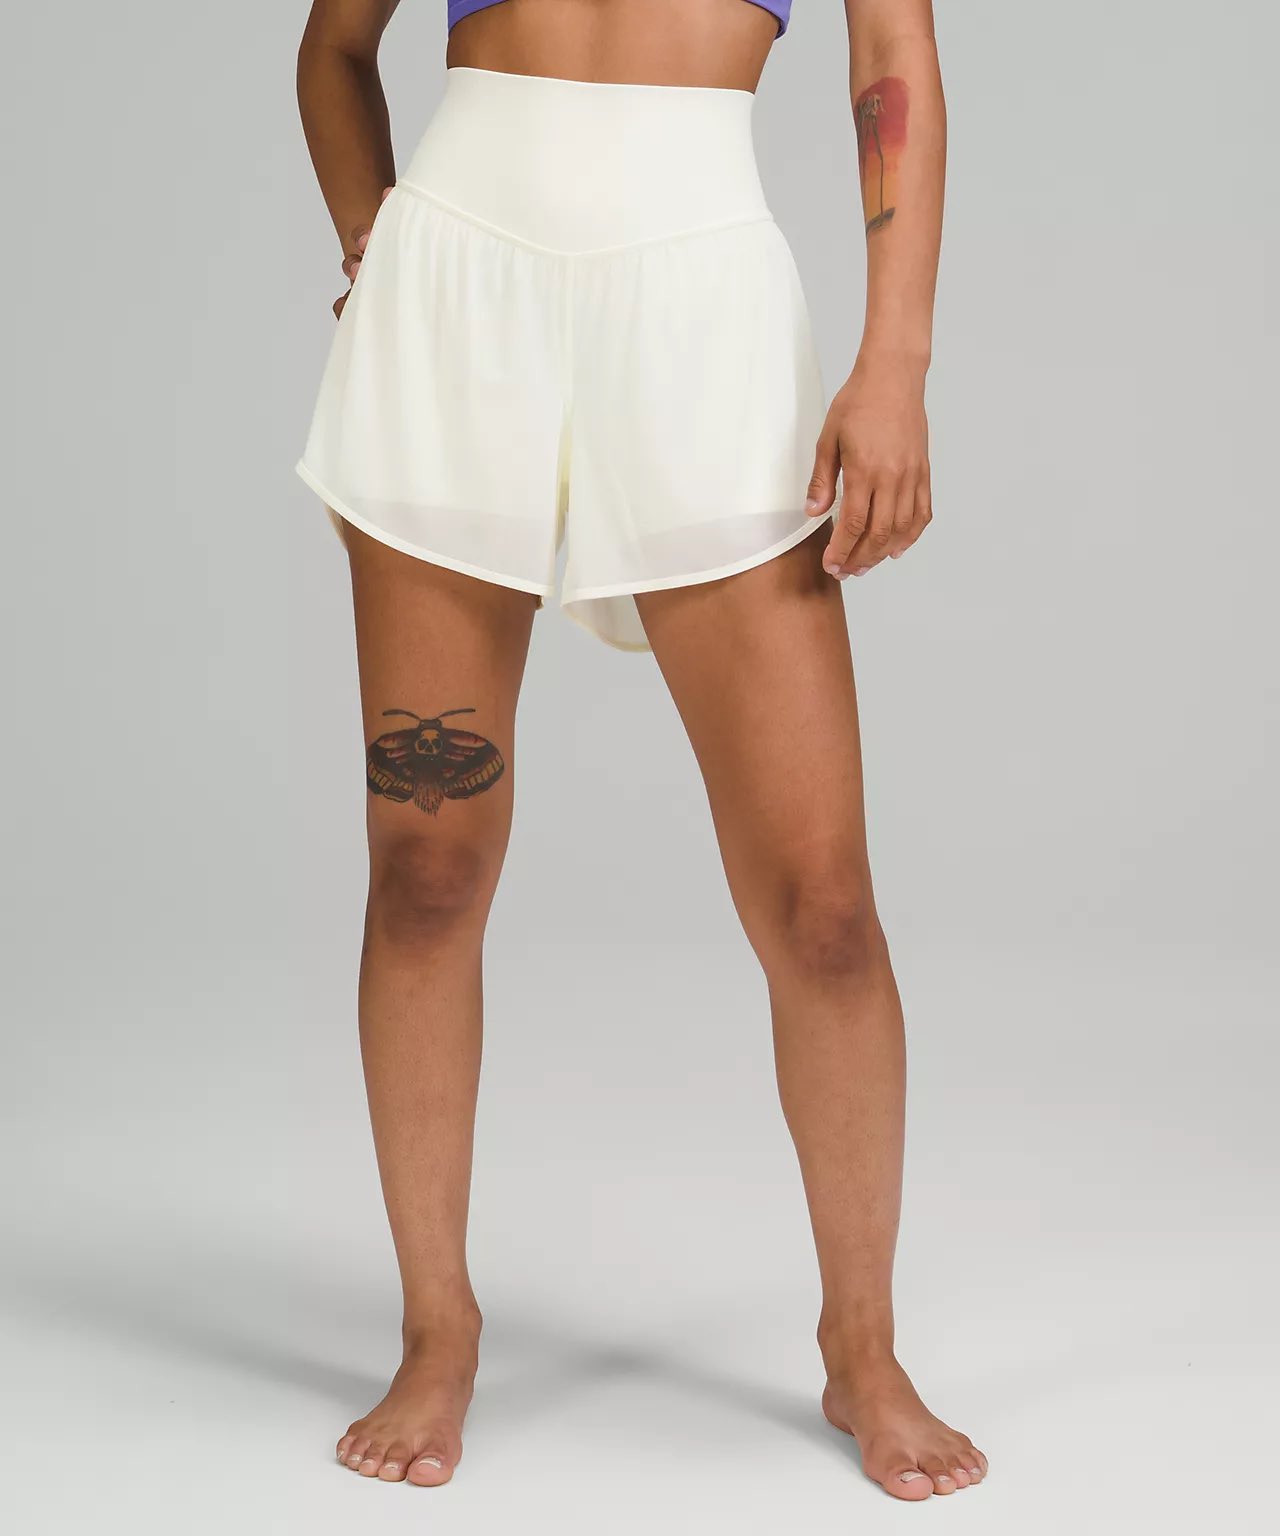 lululemon shorts - lululemon women's shorts - Nulu and Mesh High-Rise Yoga Short 3.5 - lululemon color- lemon sorbet